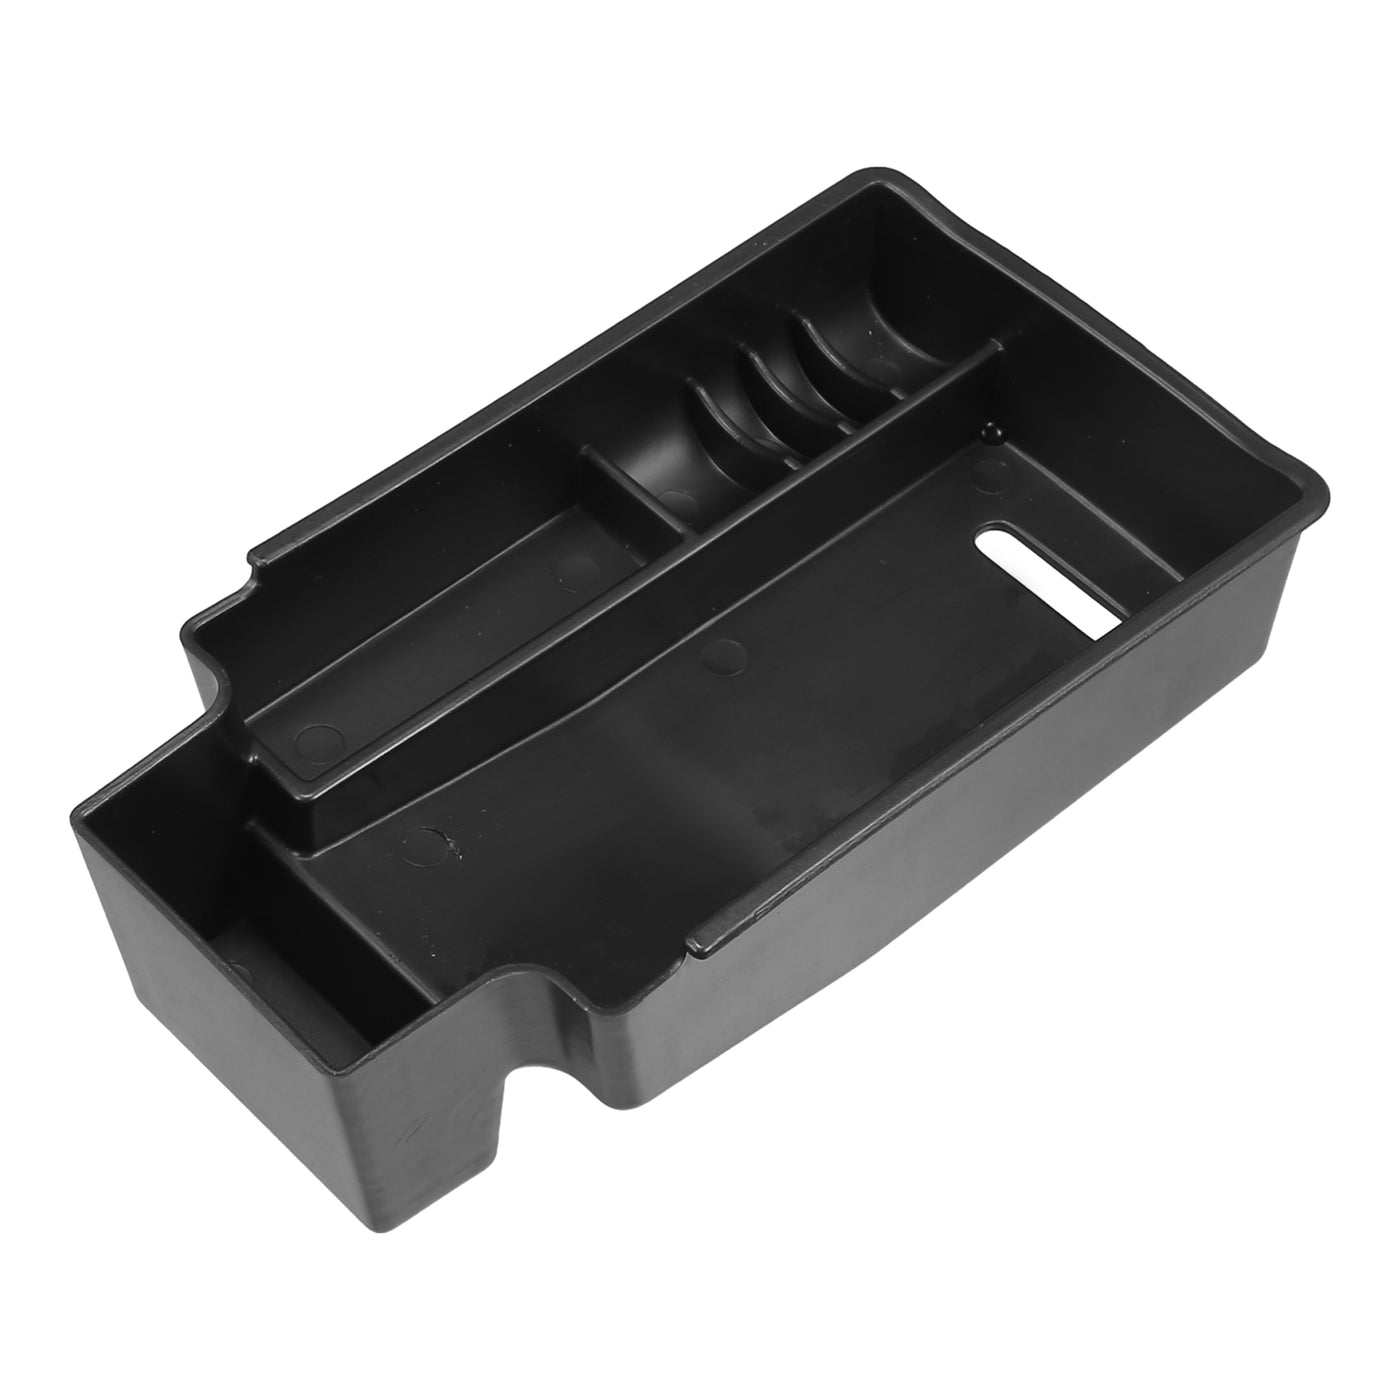 Partuto Center Console Organizer Tray - Car Front Armrest Storage Box - for Audi Q3 2013-2018 Plastic Black - 1 Pc